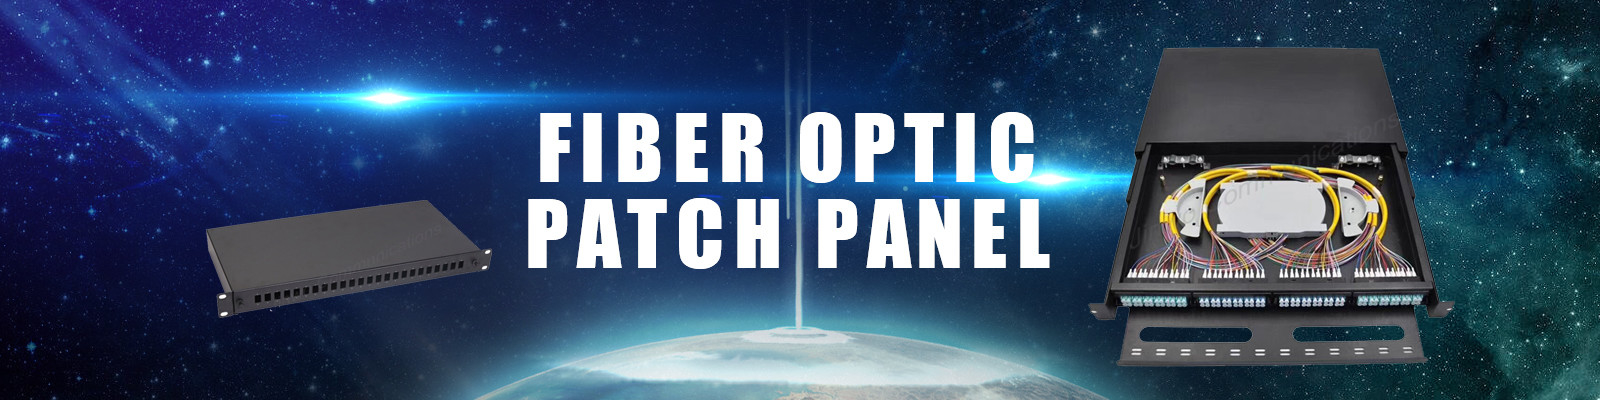 Fiber optik patch panel